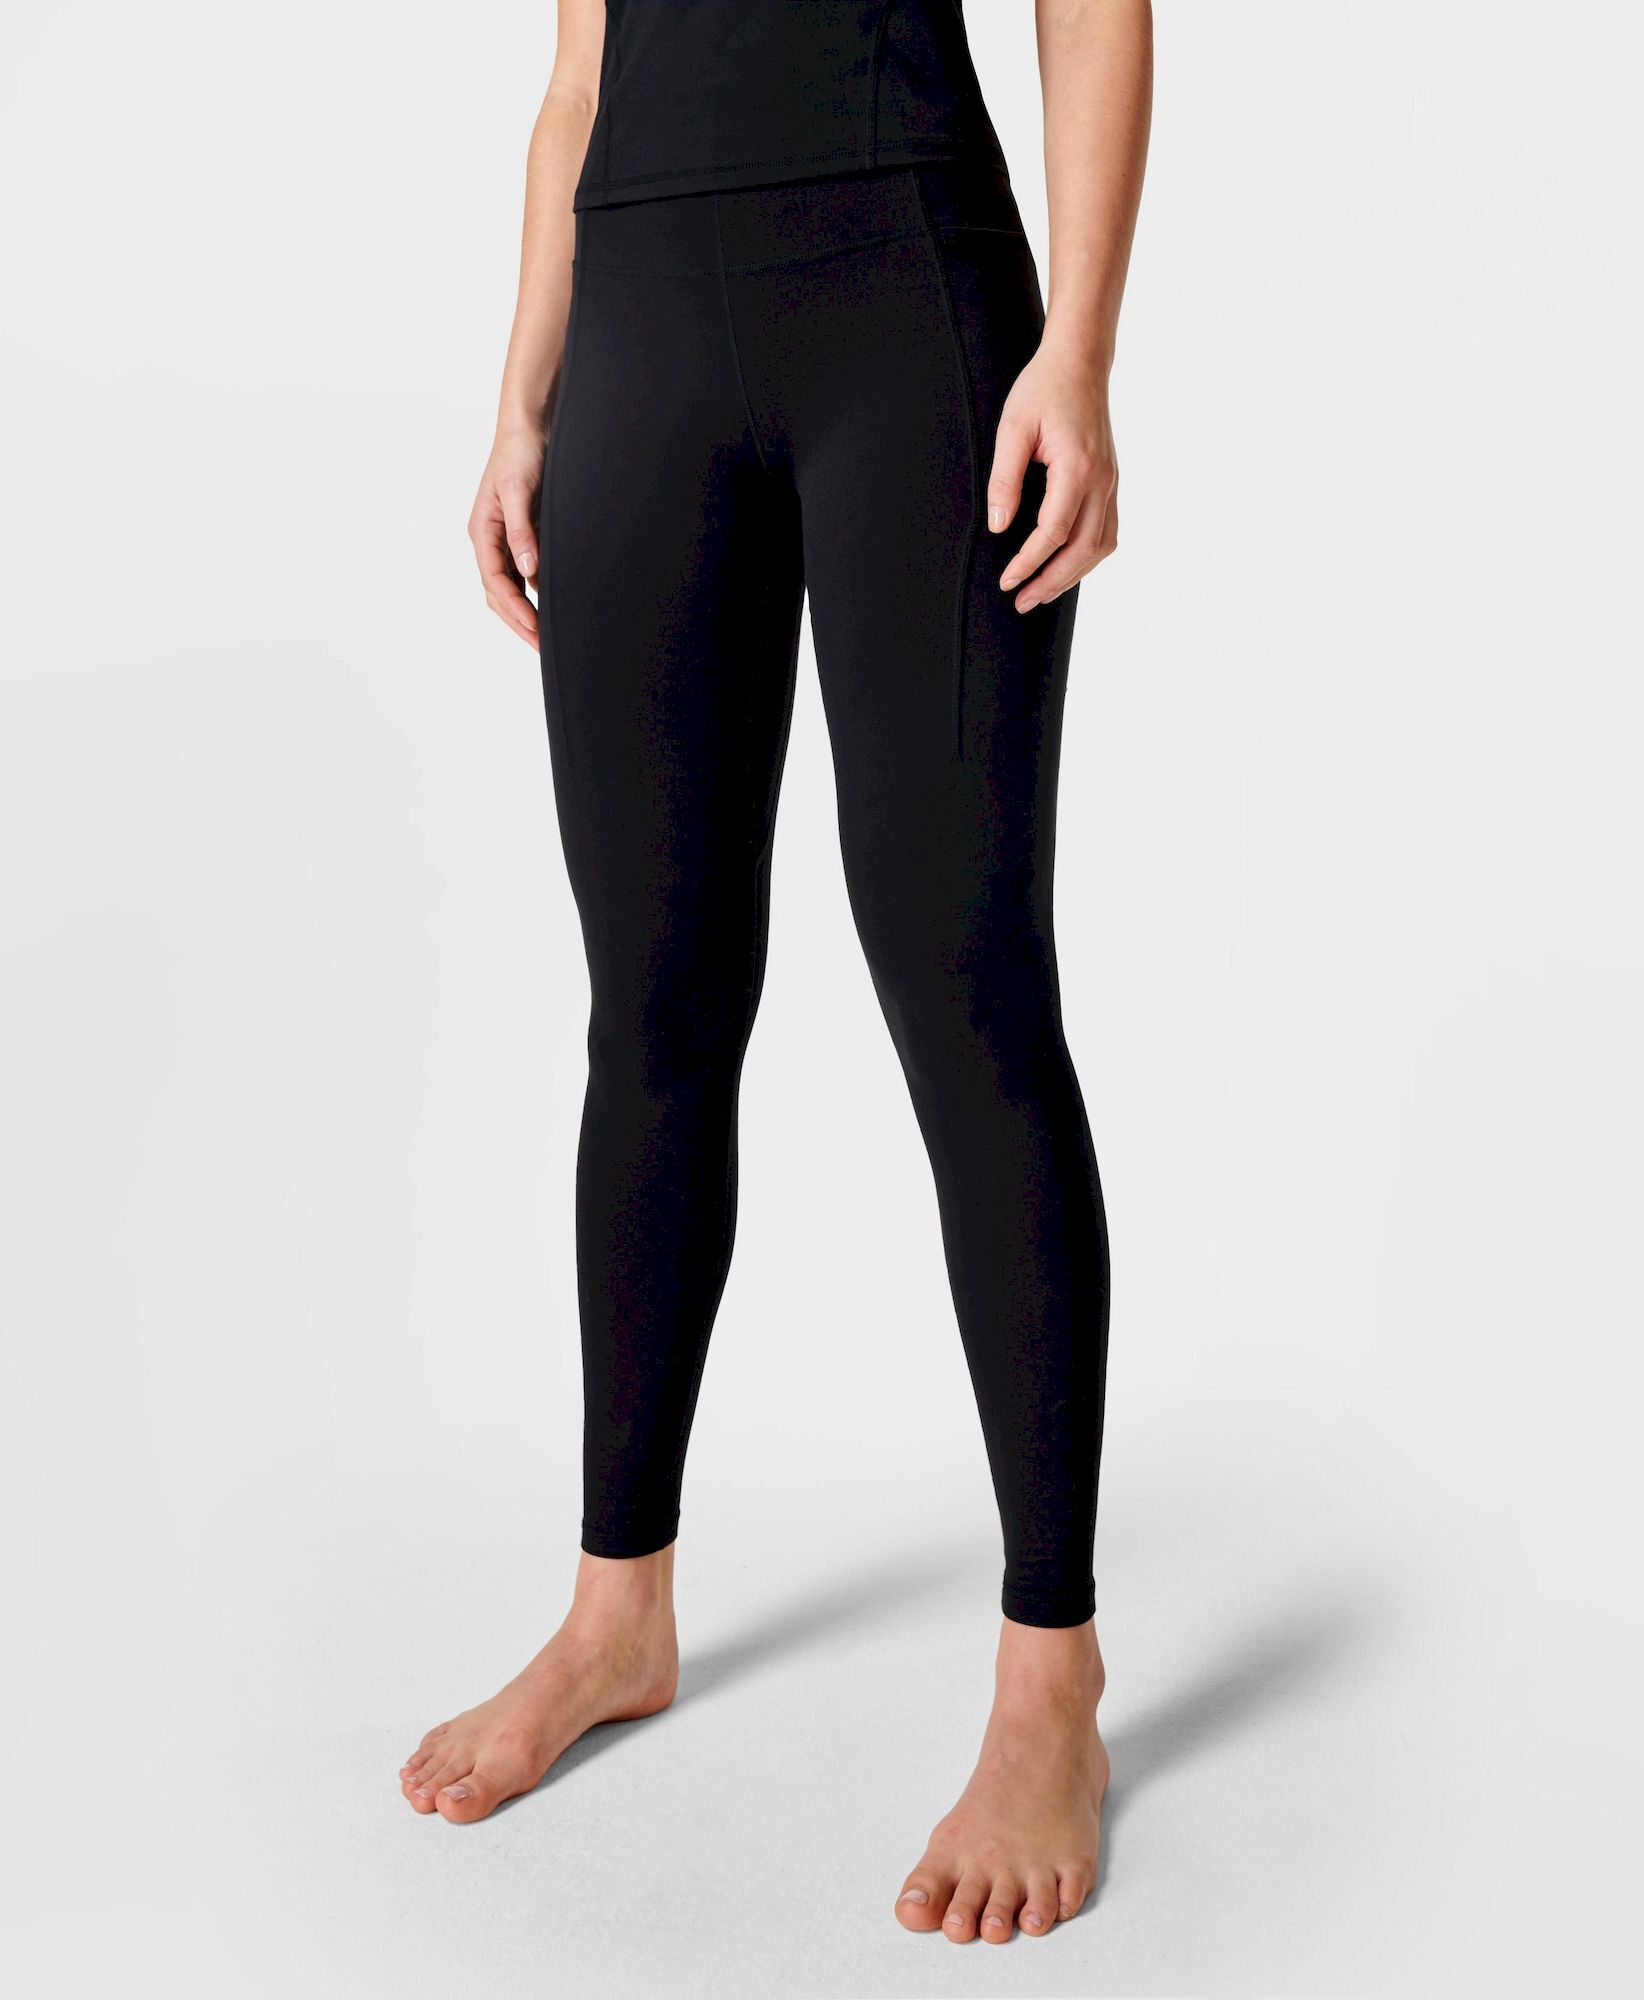 Sweaty Betty Super Soft Yoga Leggings - Yoga leggings - Women's | Hardloop